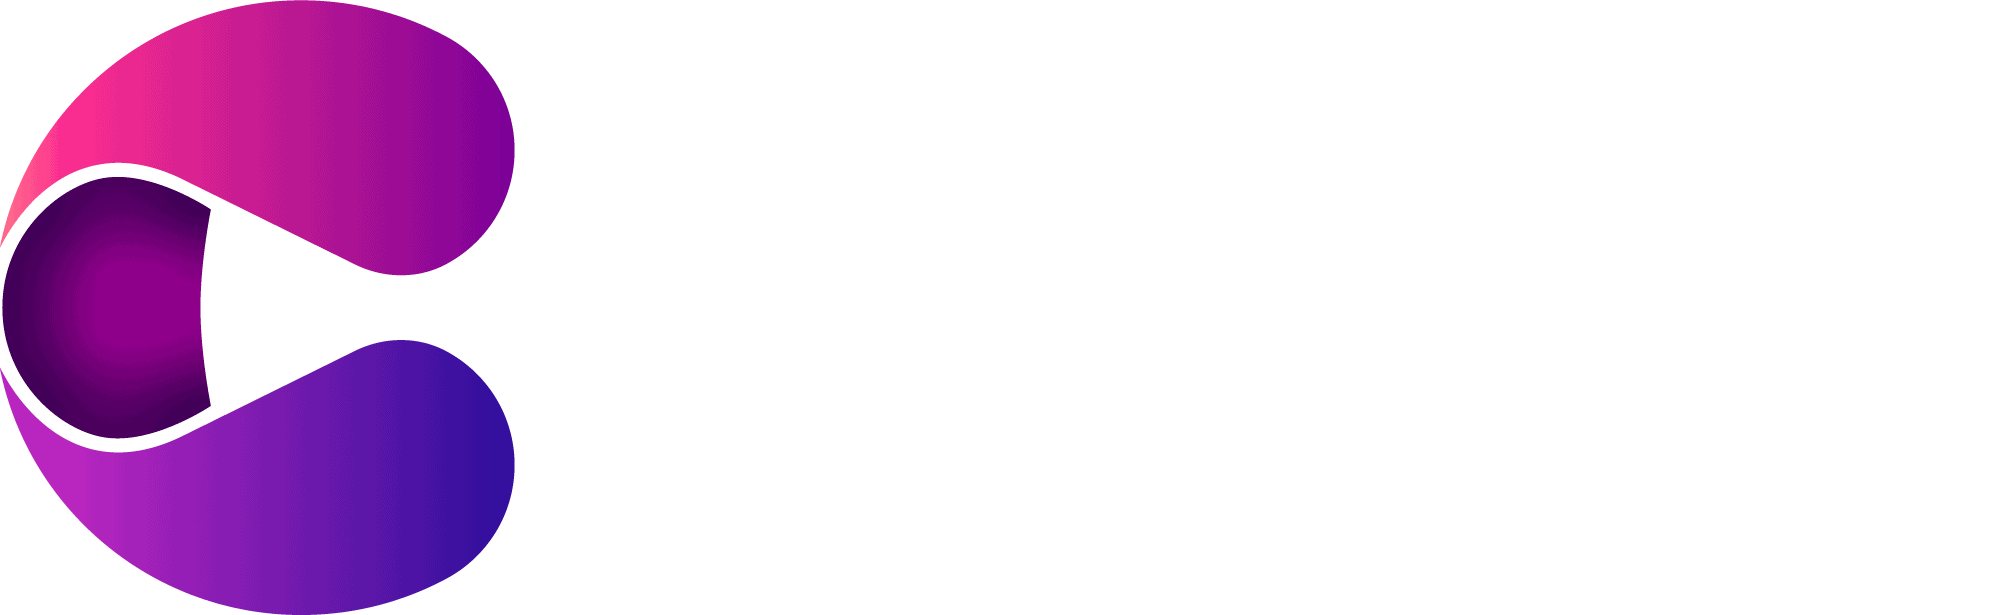 Catheon gaming_white